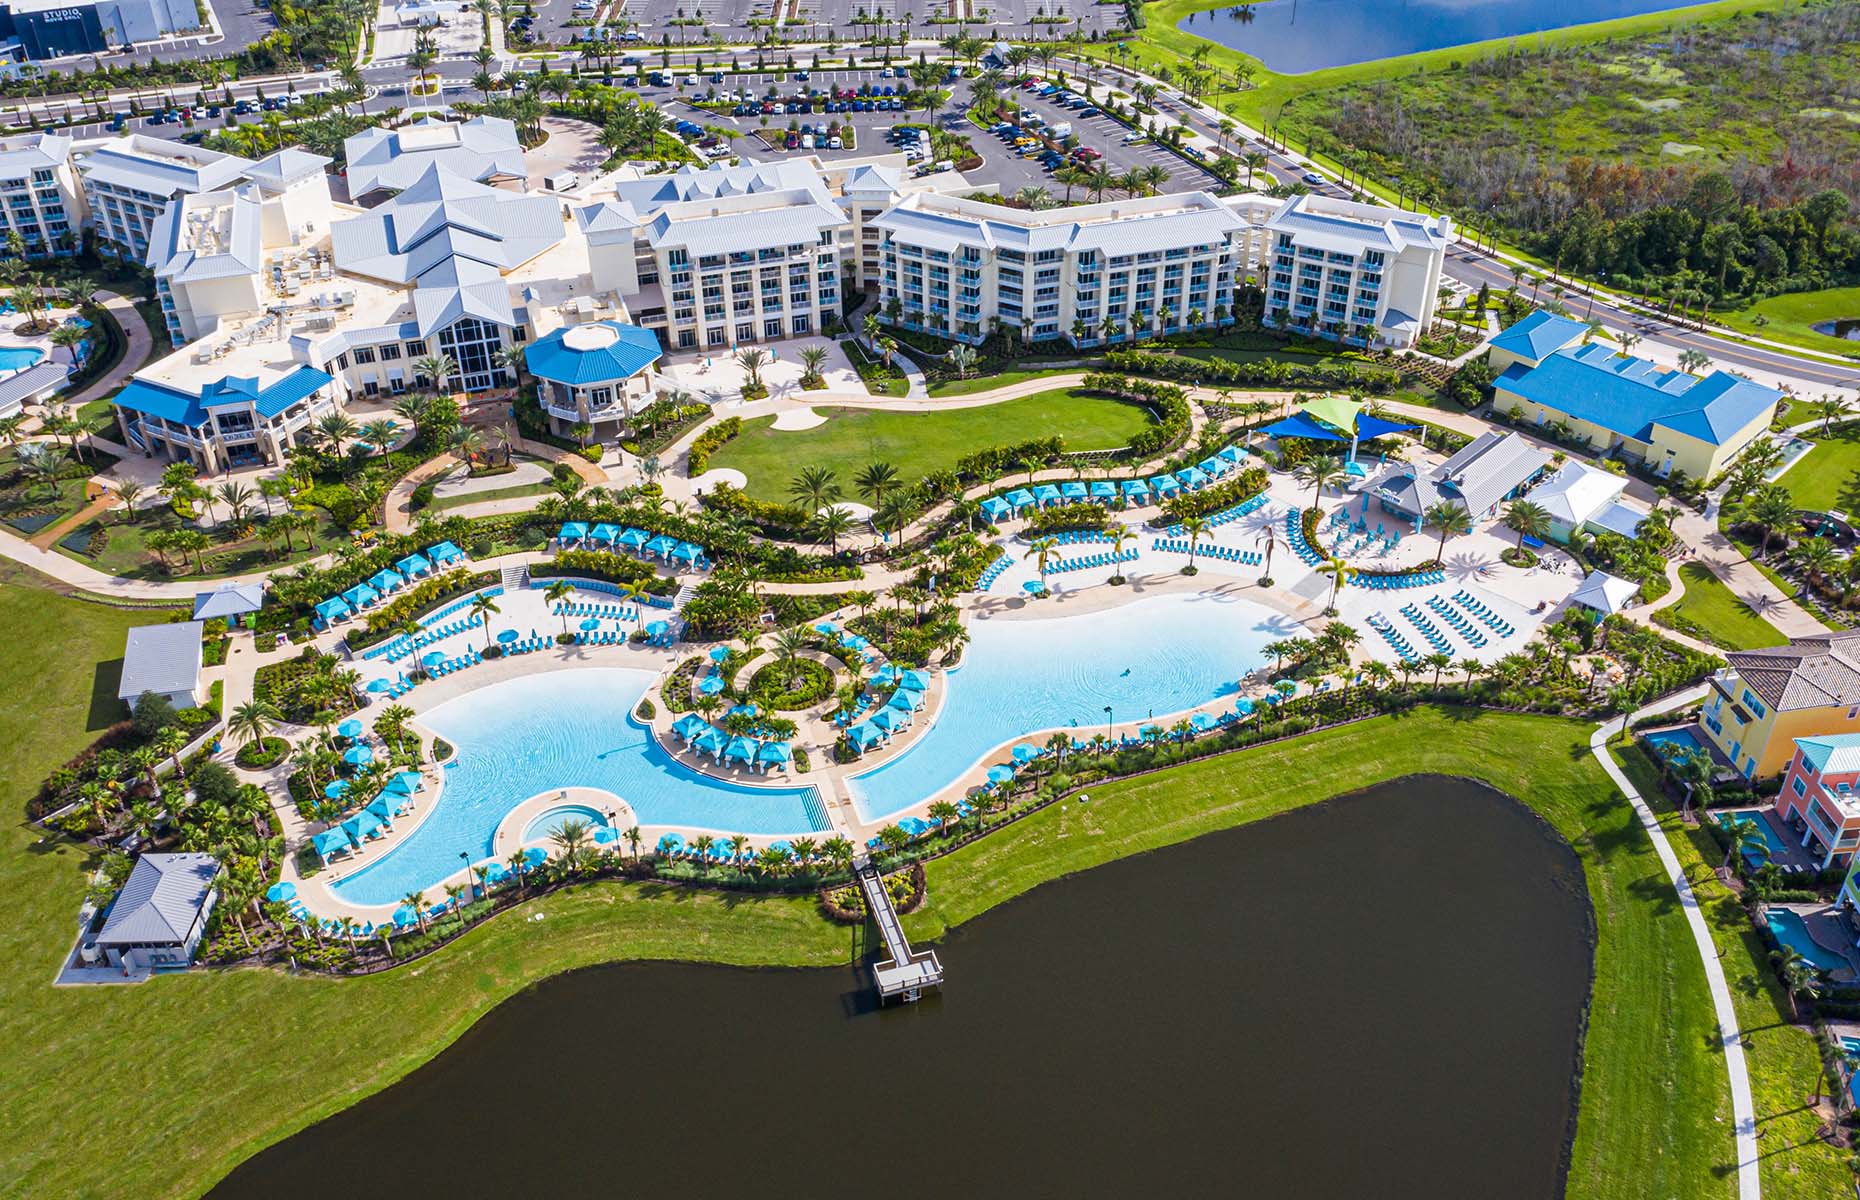 Aerial view of Margaritaville Resort Orlando (Image: Courtesy of Margaritaville Resort Orlando)